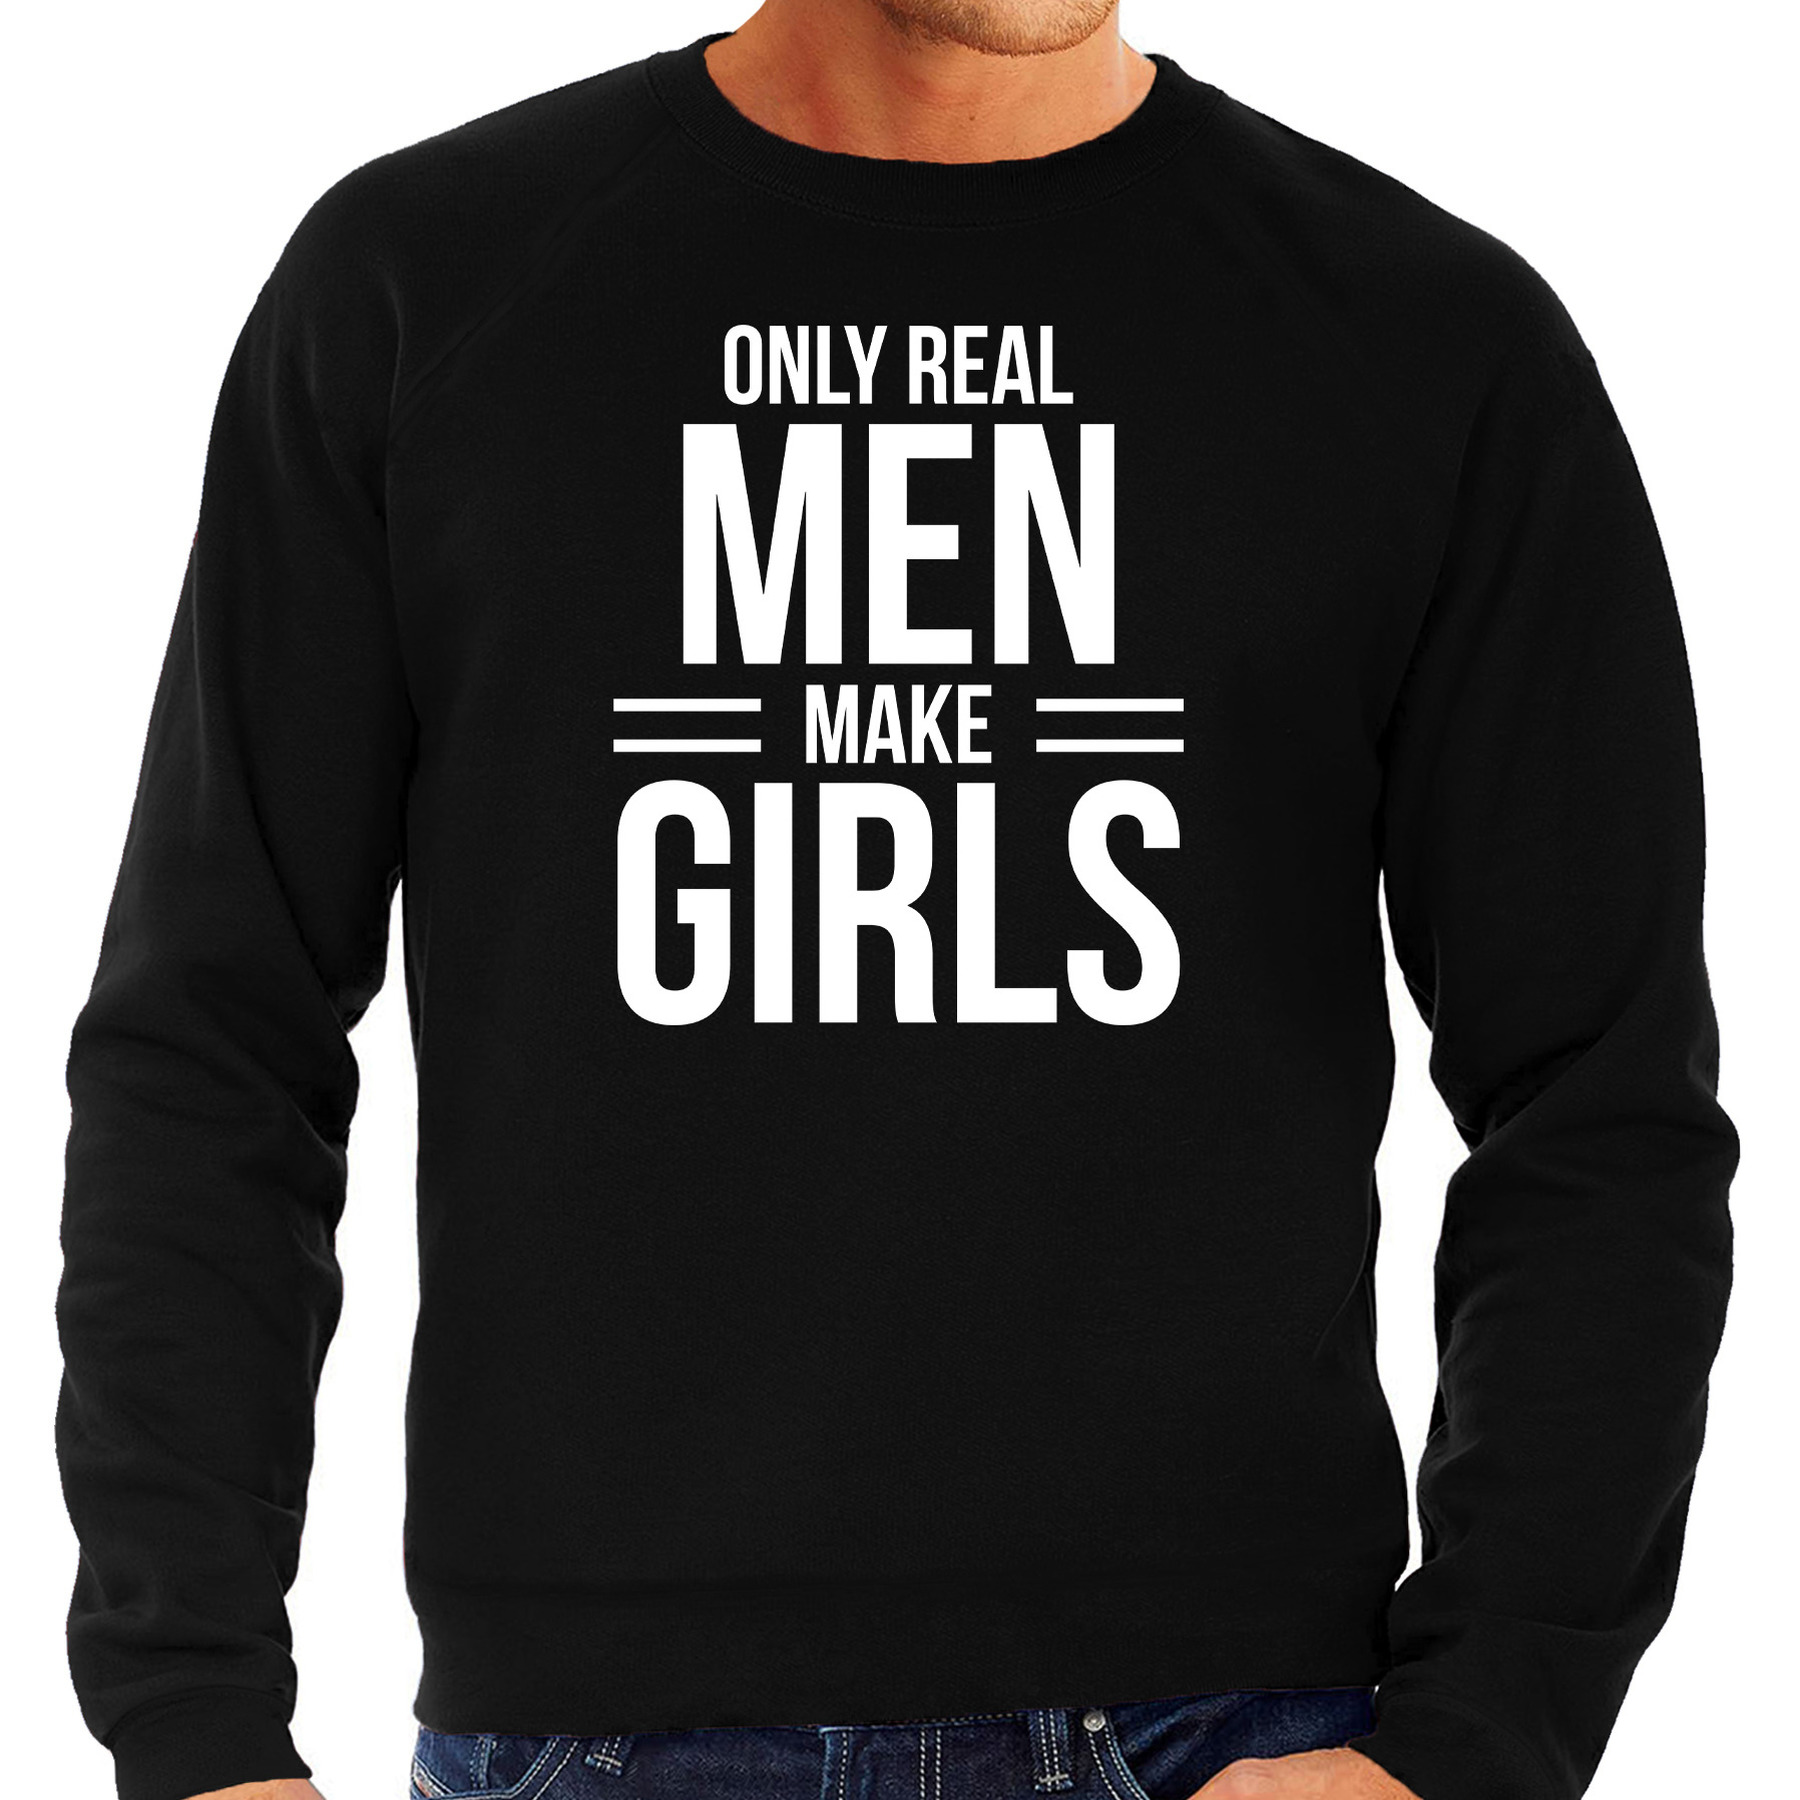 Only real men make girls sweater zwart voor heren papa vaderdag cadeau trui